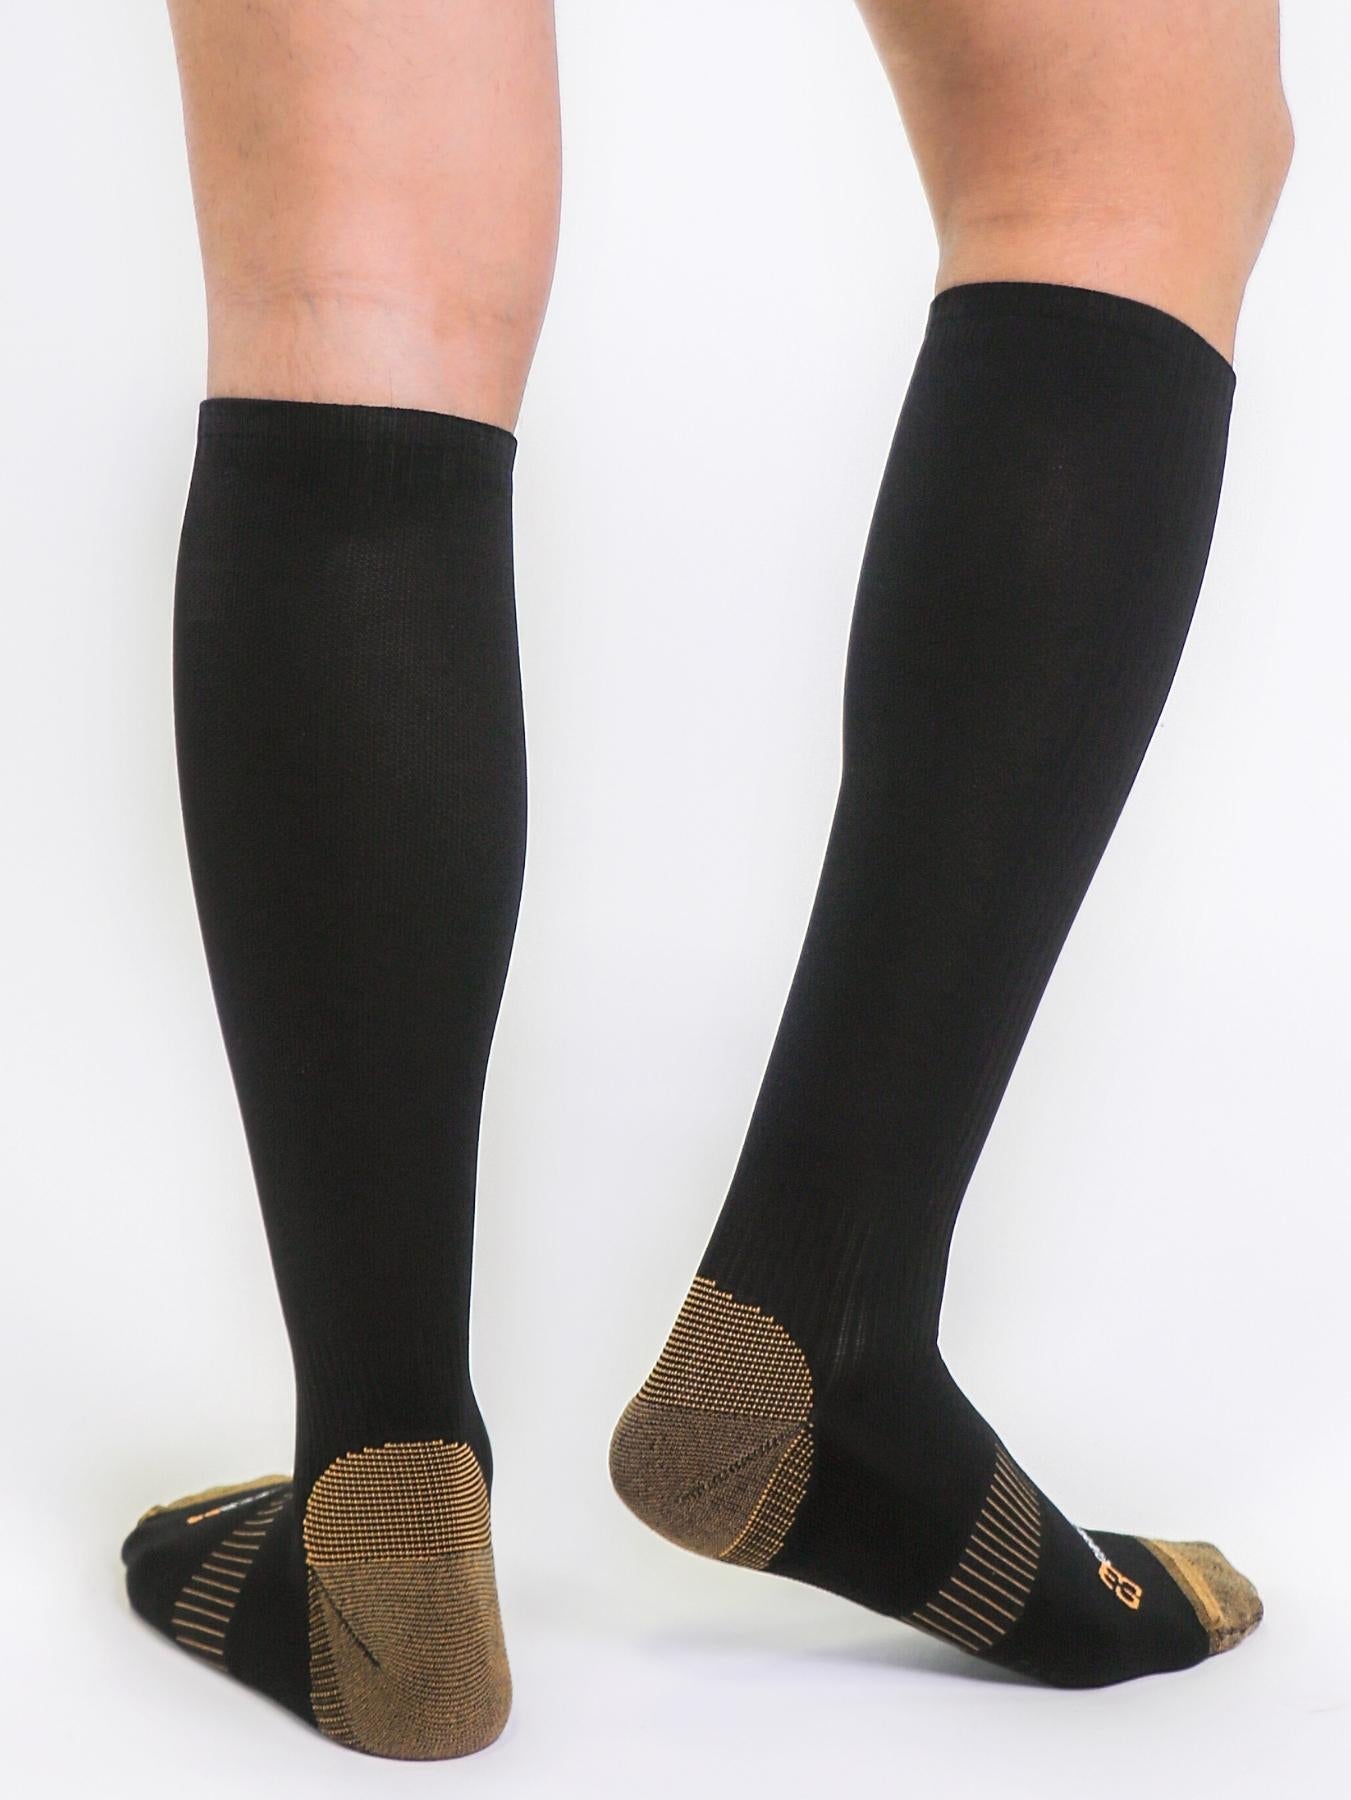  CopperSport Copper Compression Socks - Suitable for